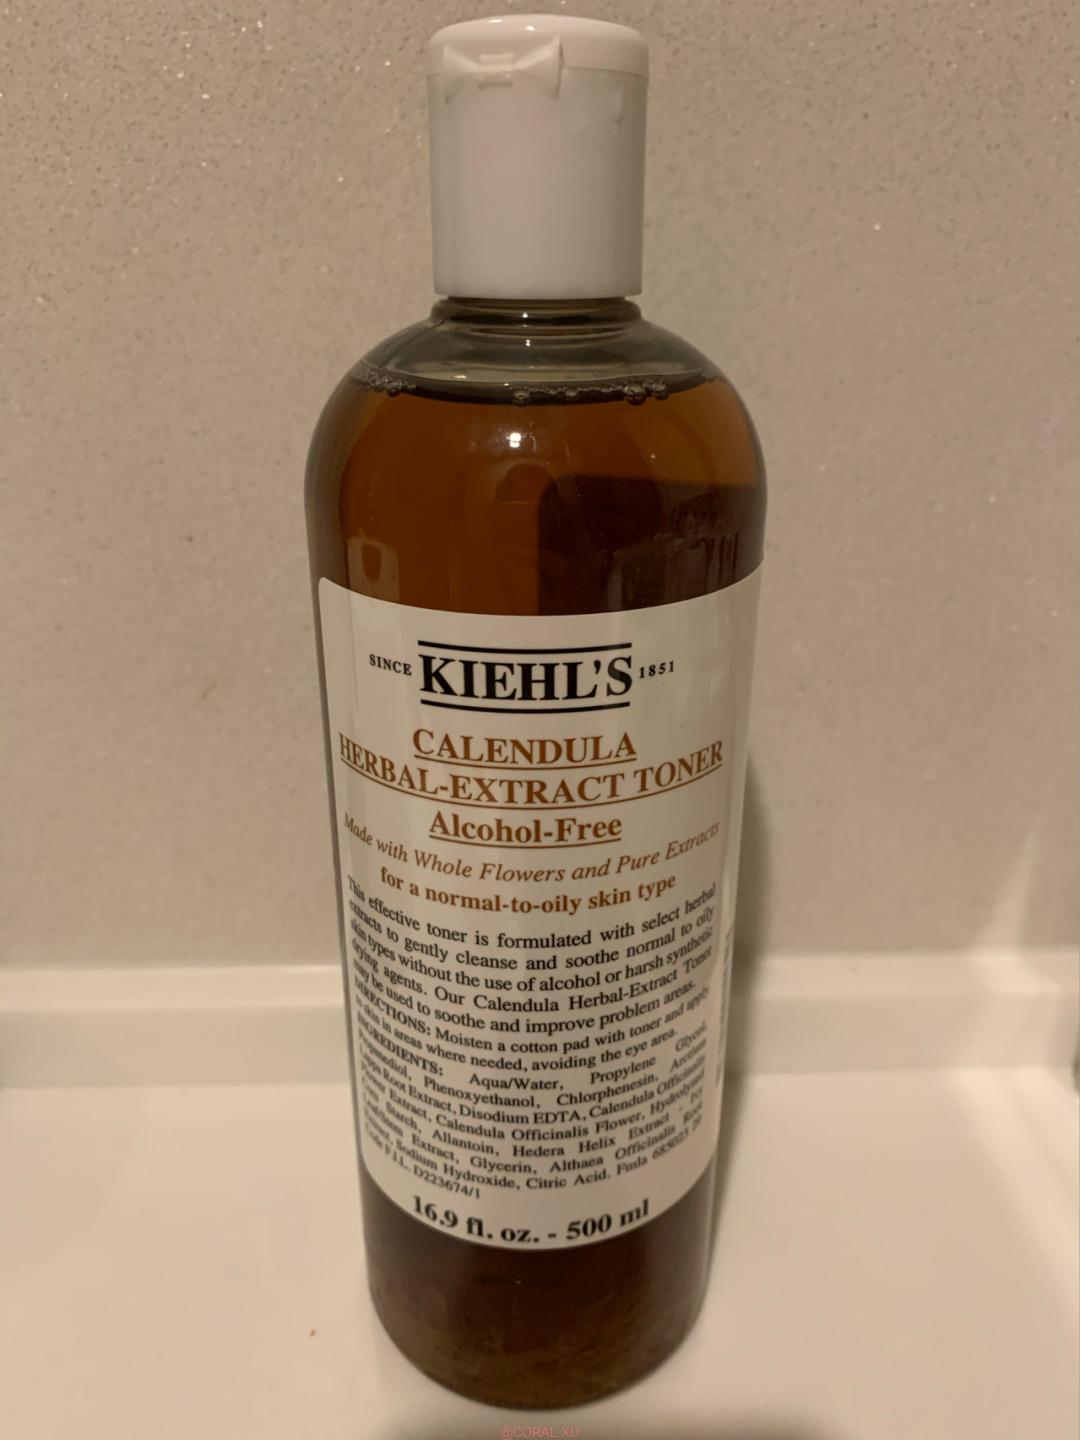 Kiehls Calendula Herbal Extract Toner Review 2 1 - Kiehl’s Calendula Herbal-Extract Toner Review